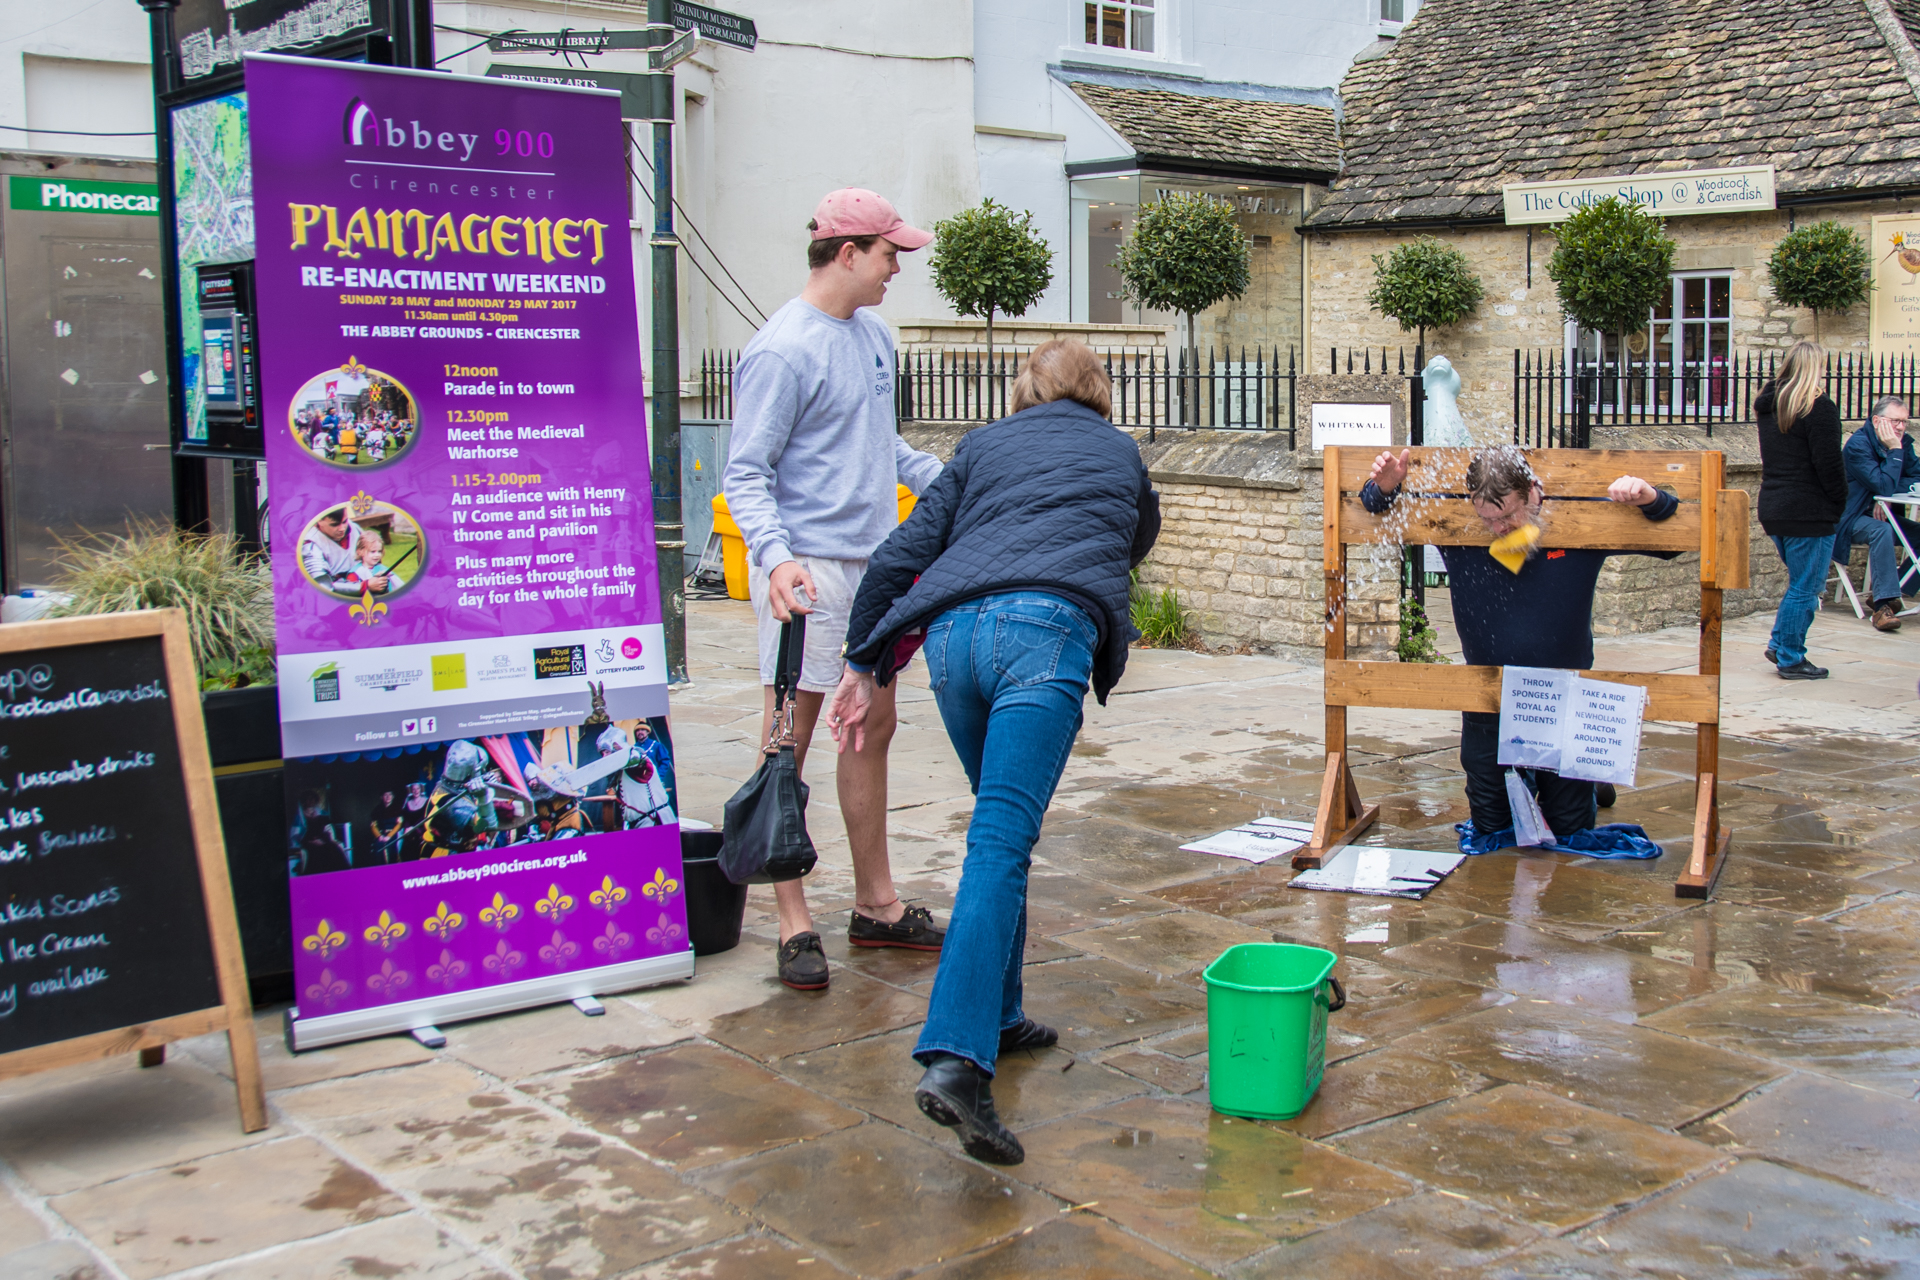 Cirencester's Fleece Fayre celebrations